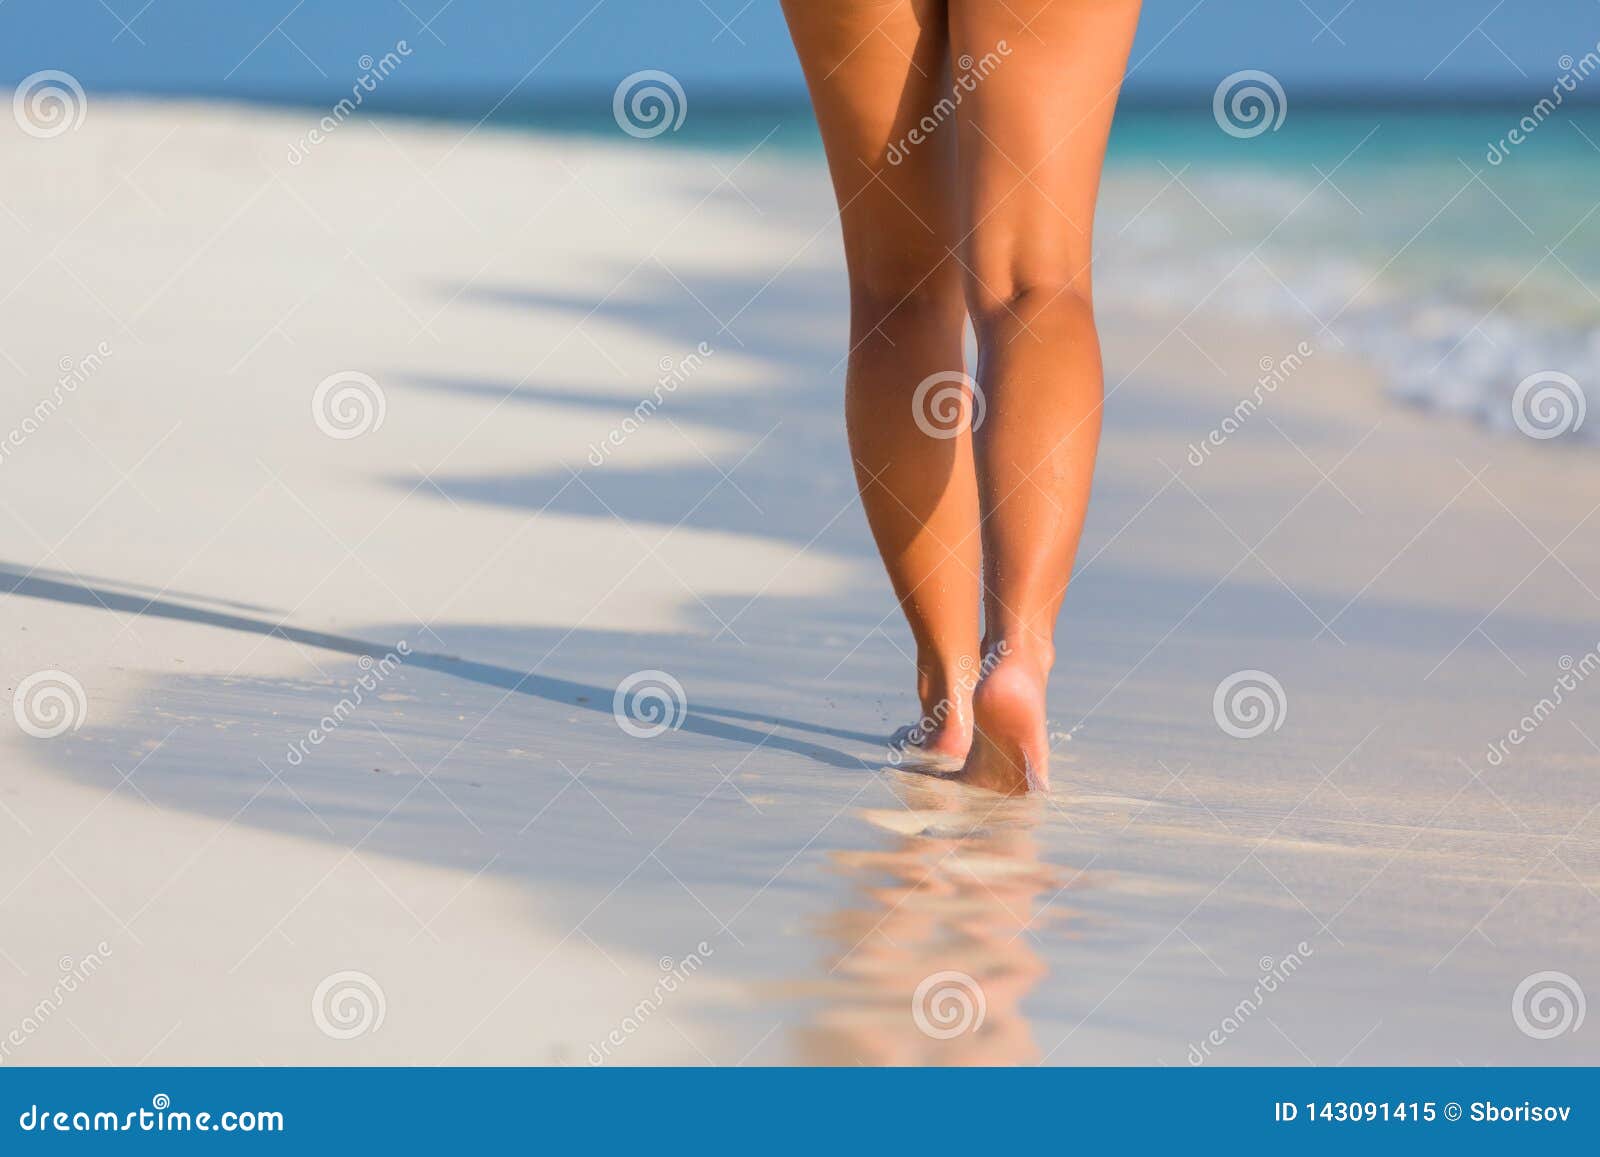 Walkers nude beach Orient: The